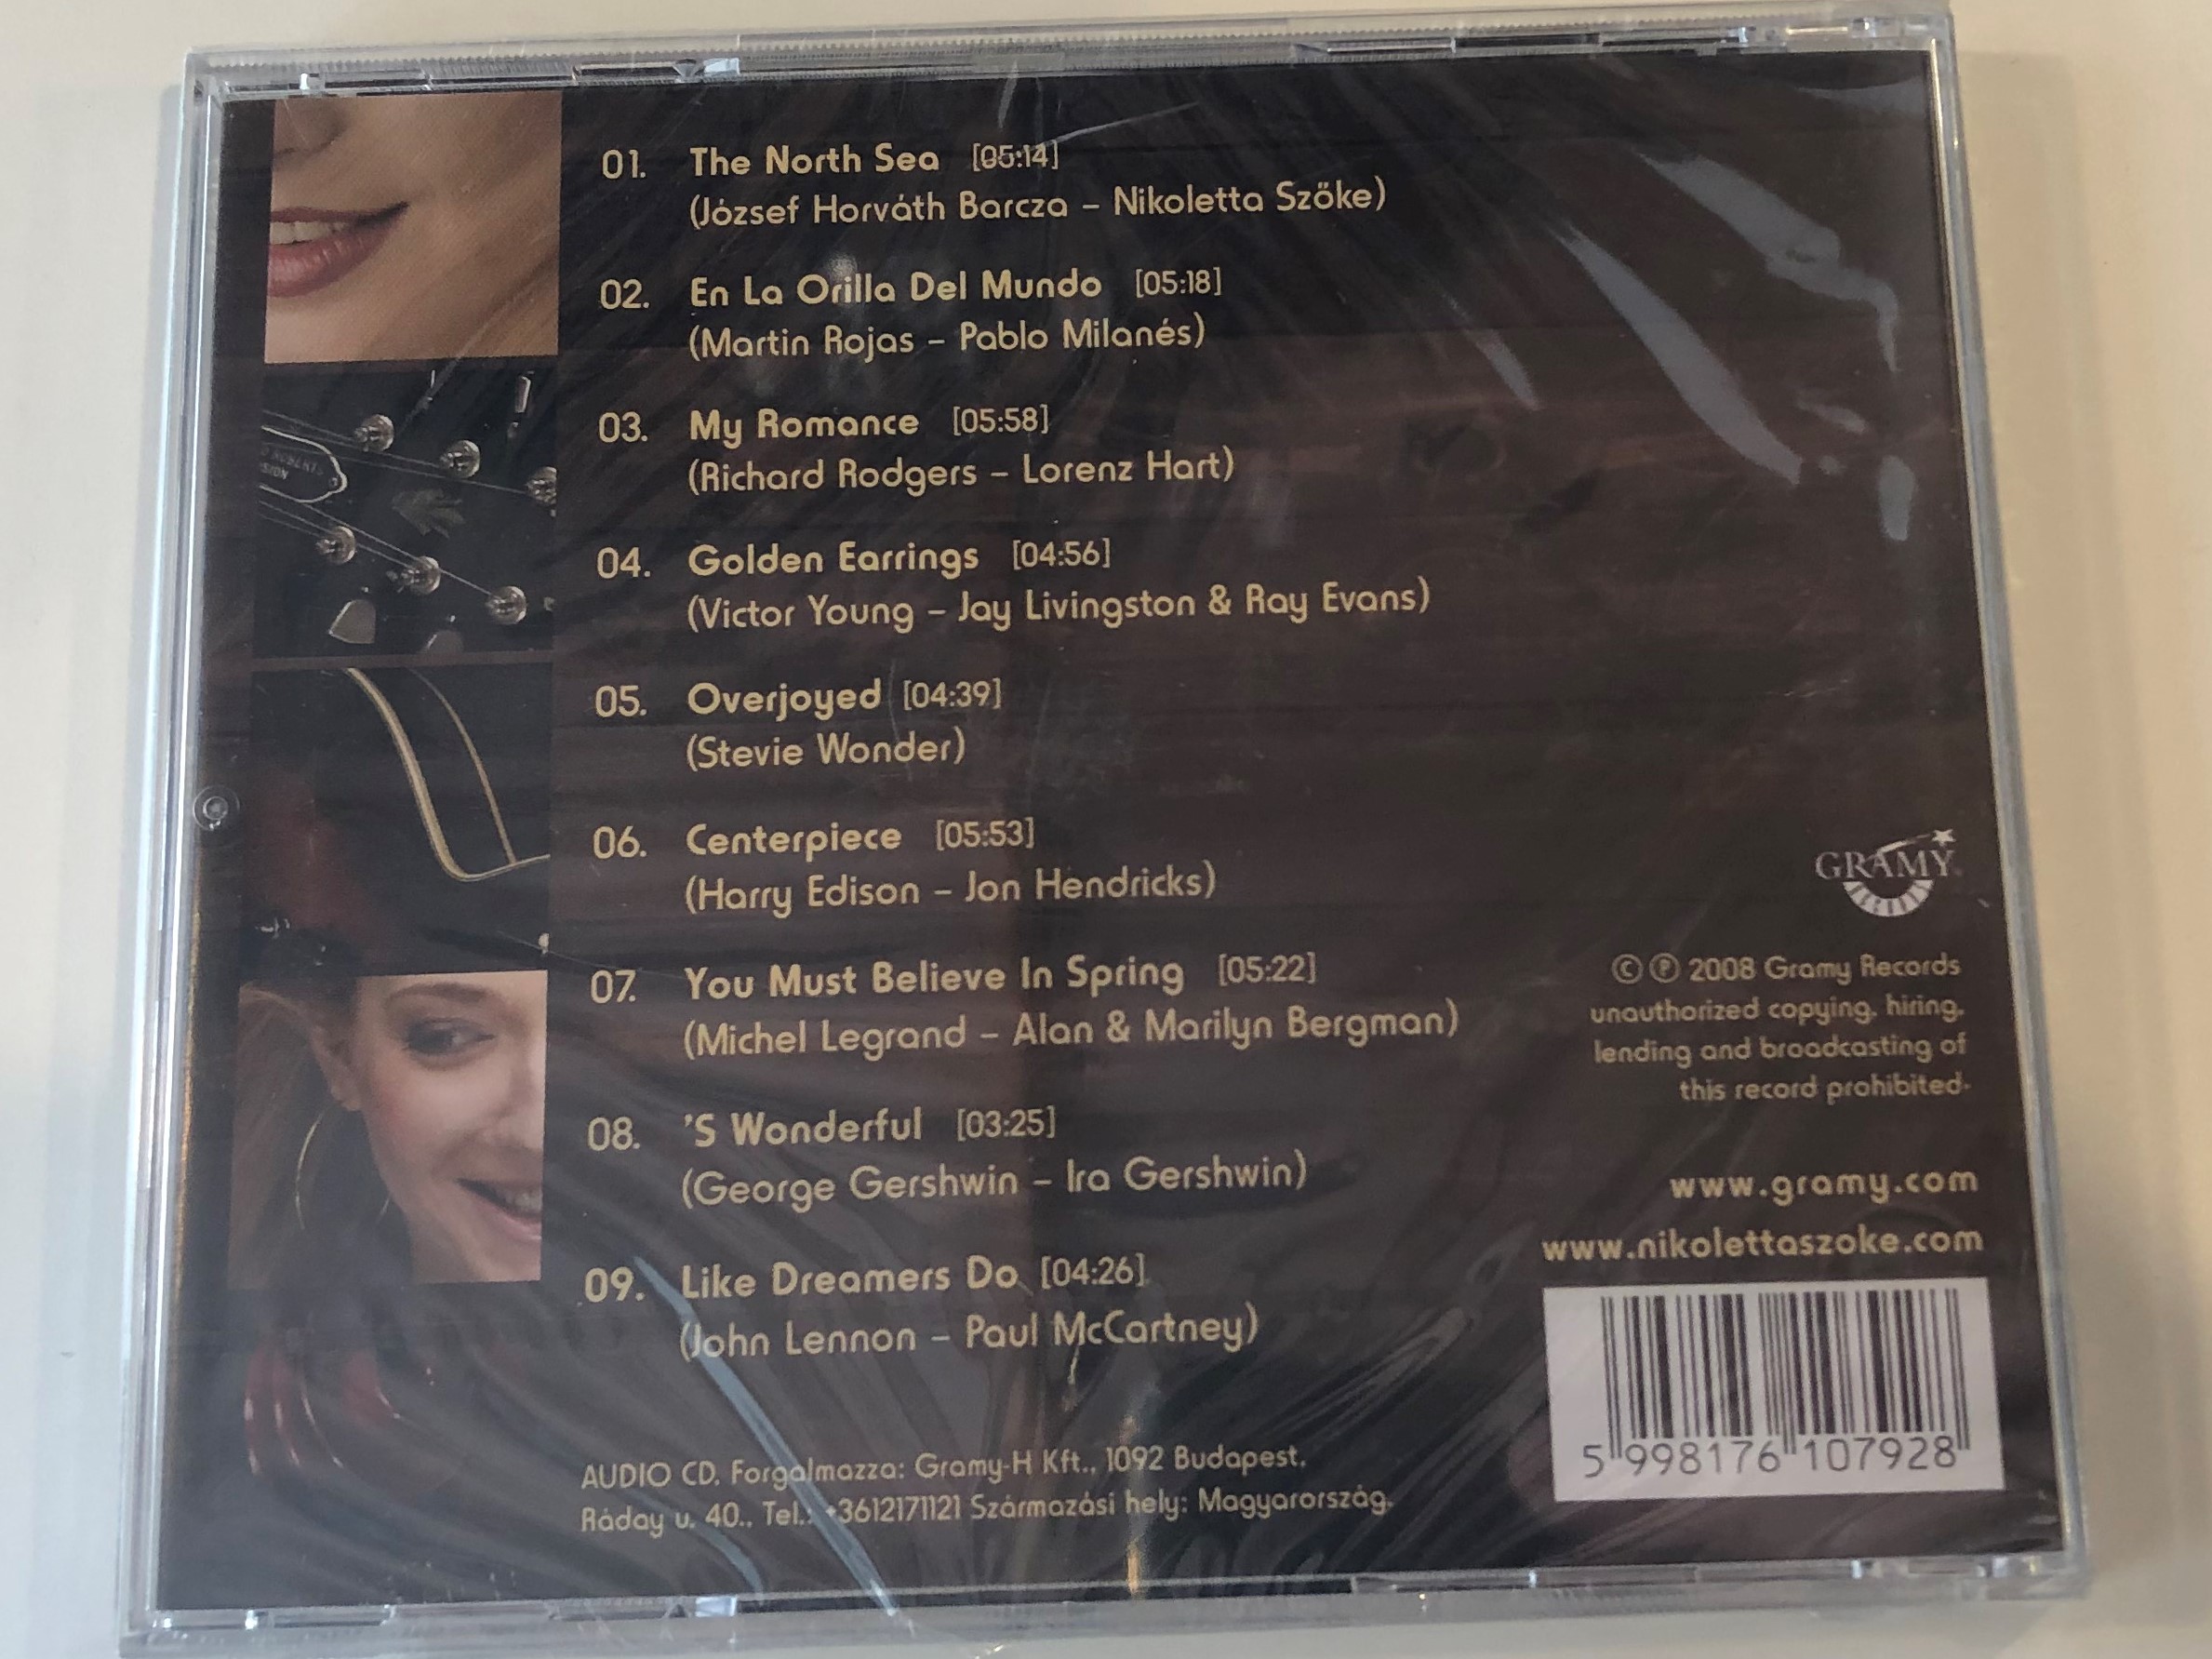 nikoletta-sz-ke-golden-earrings-gramy-records-audio-cd-2008-5998176107928-2-.jpg